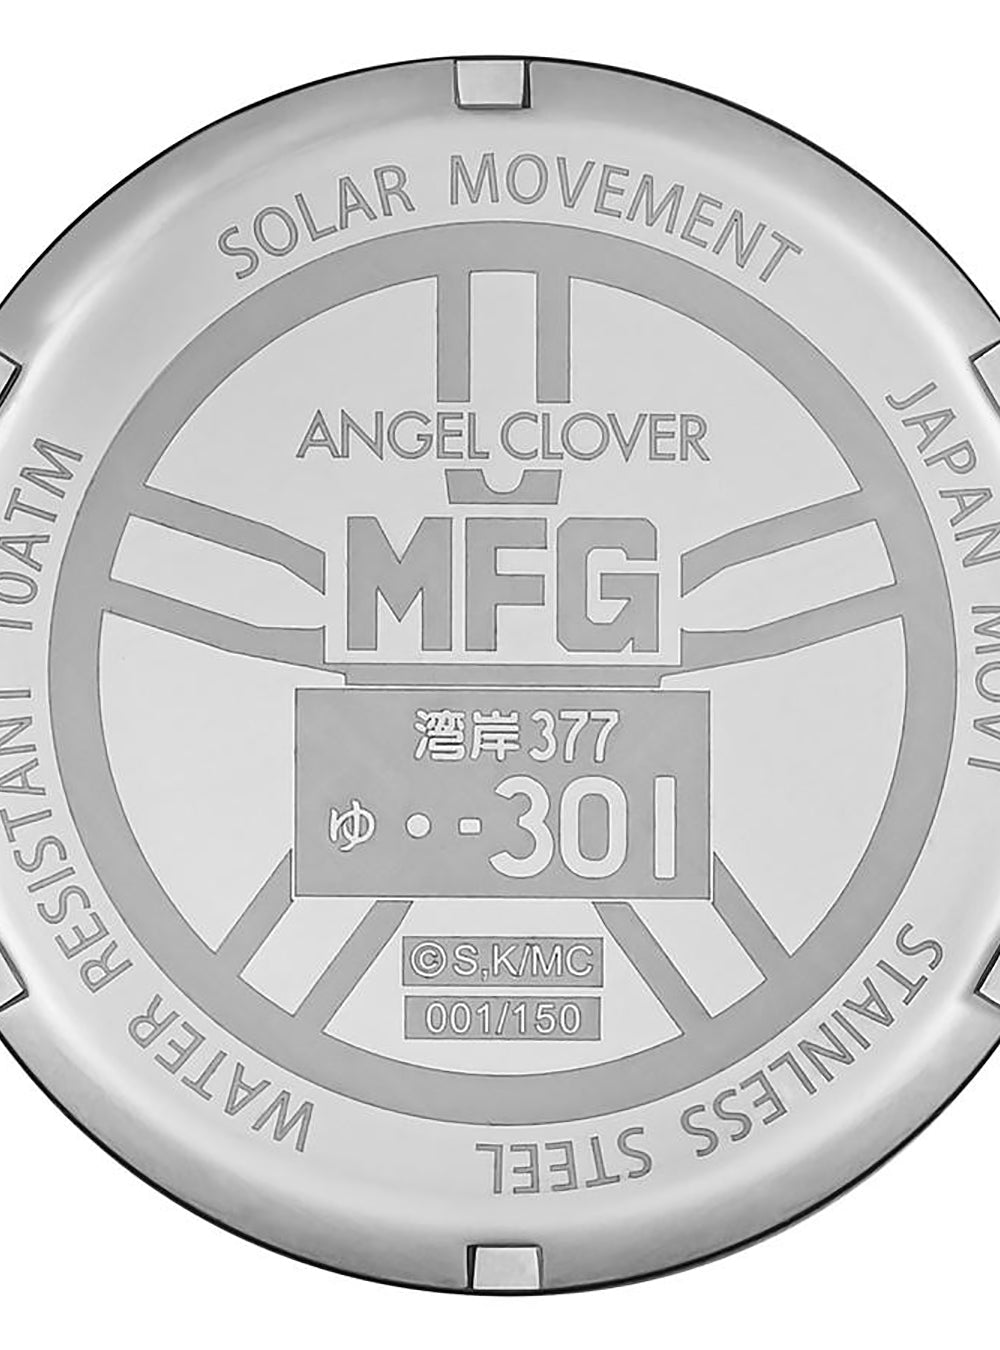 ANGELCLOVER × MF GHOST COLLABORATION WATCH - EXVENTURE SOLAR EVS43MFG-FR KAITO AKABA FERRARI 488GTB MODEL LIMITED EDITIONWRISTWATCHjapan-select